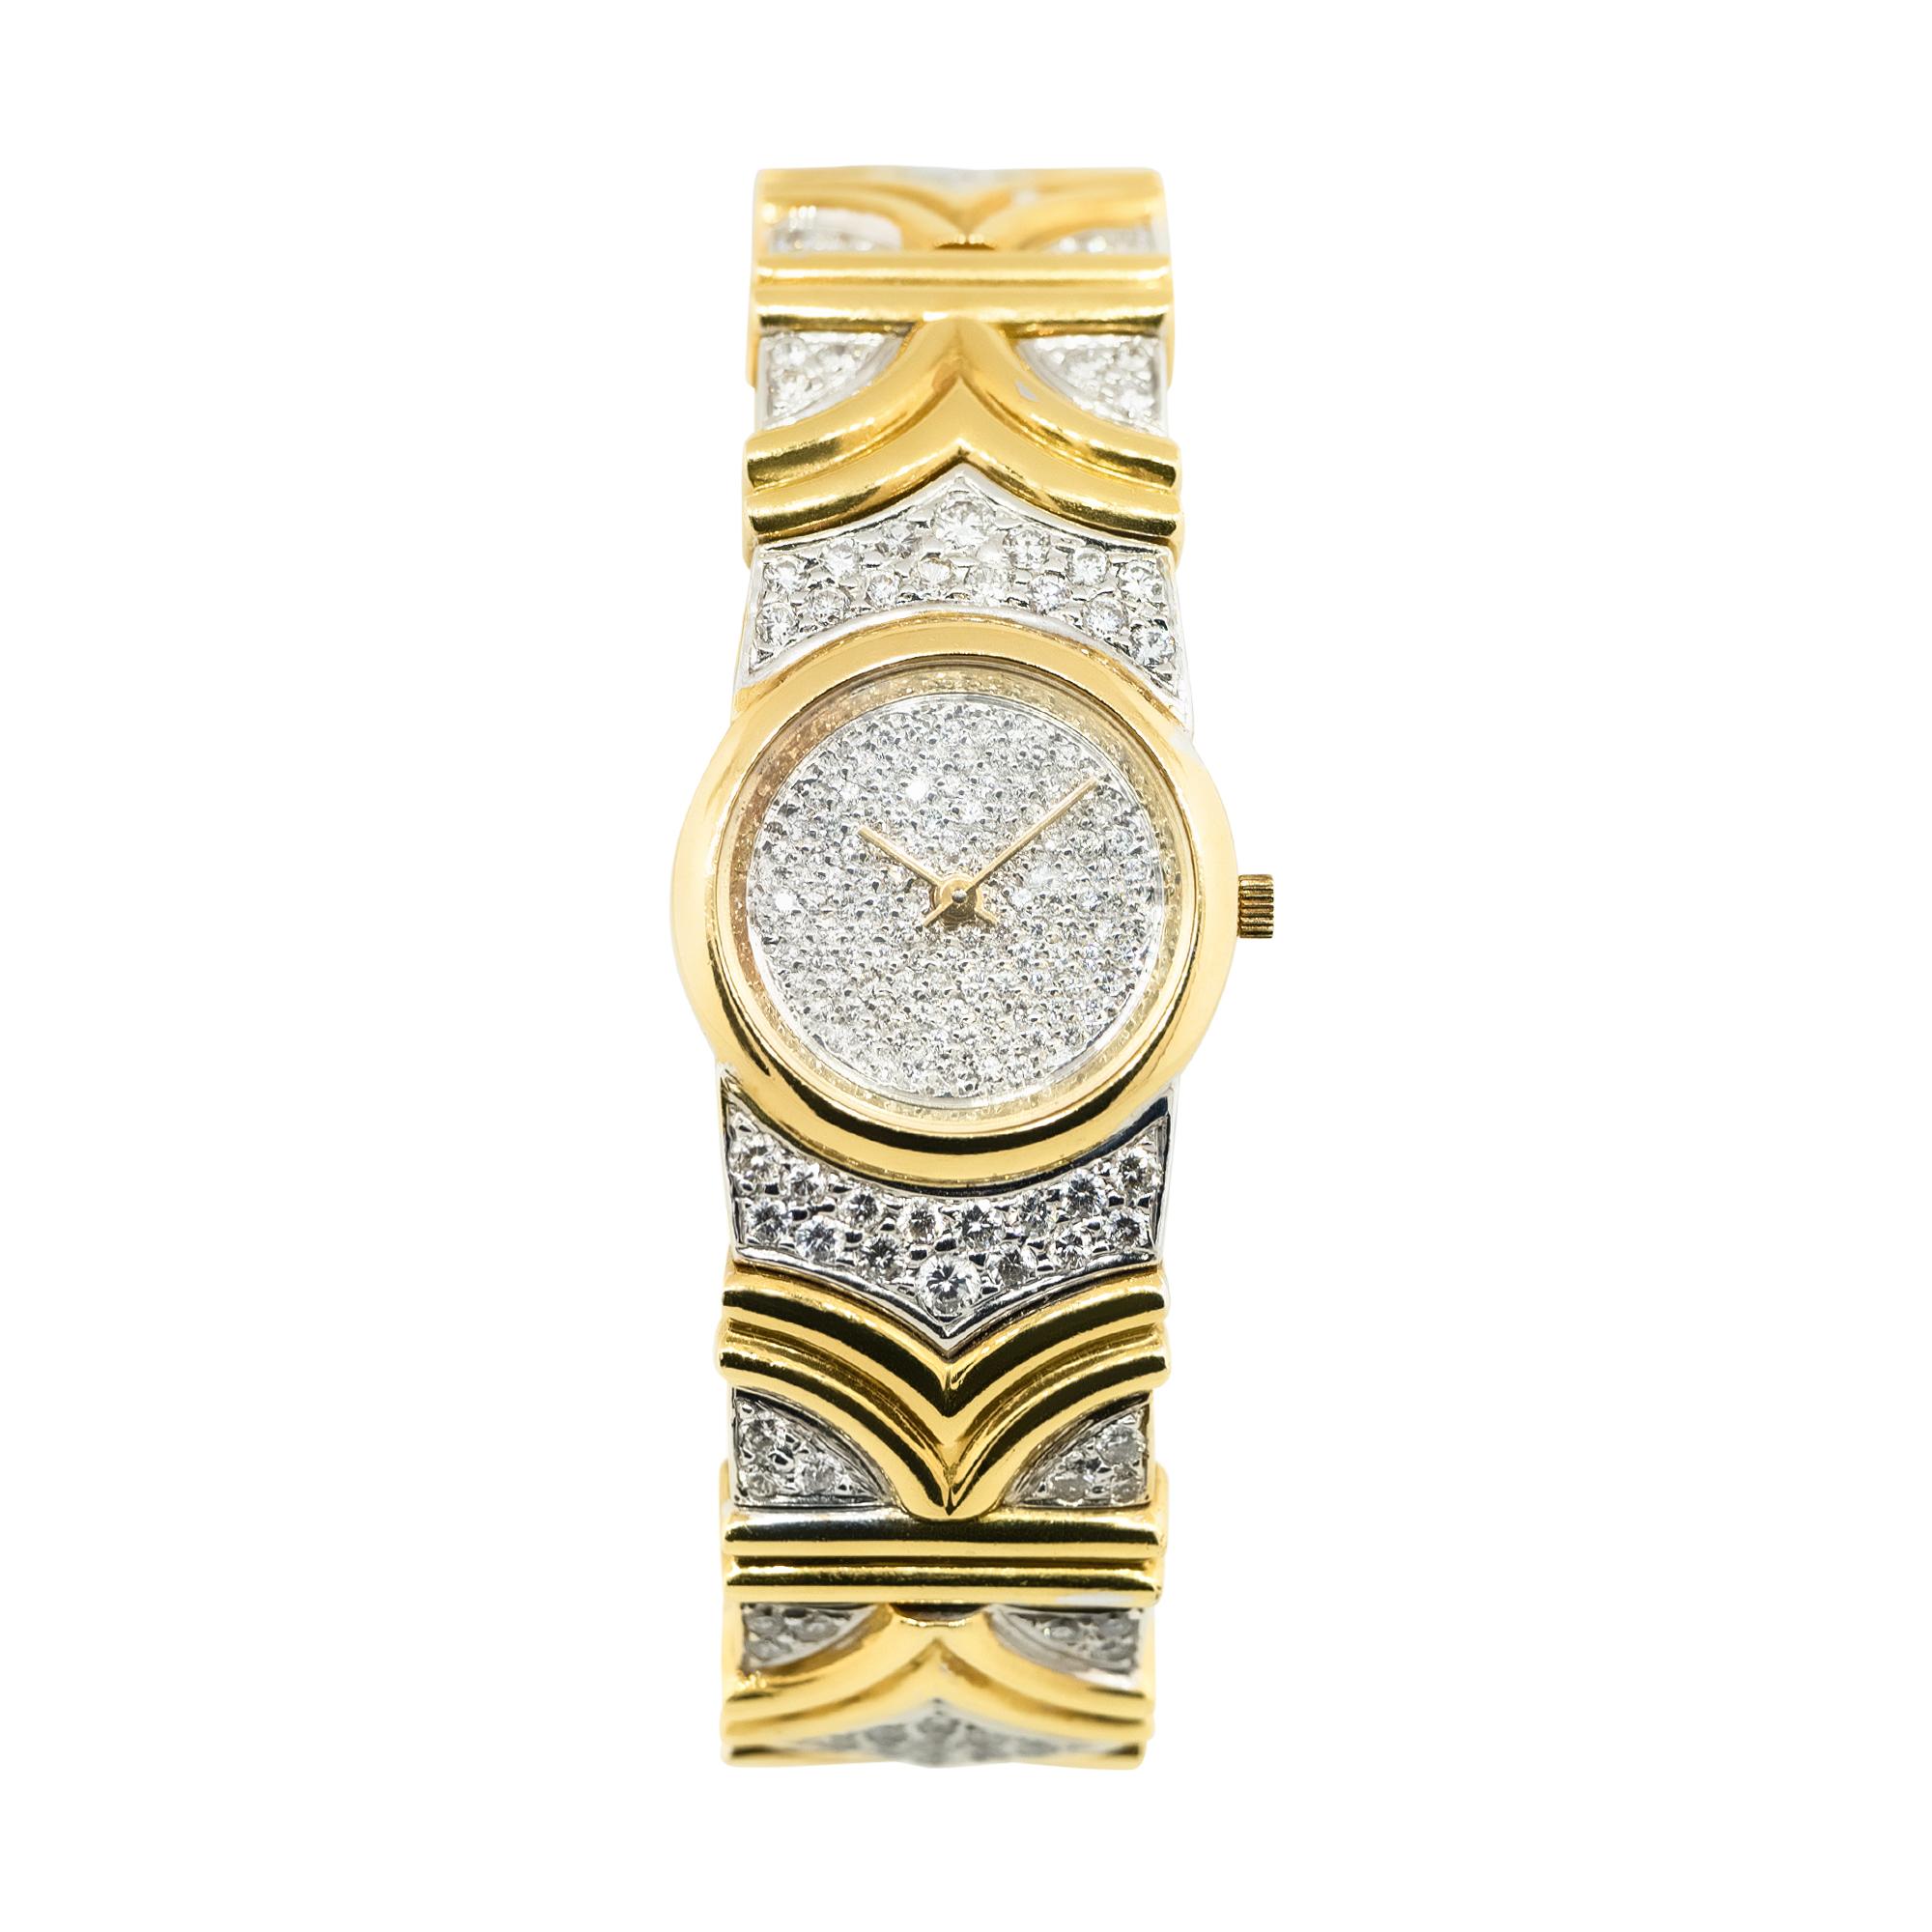 Women's Ladies Yellow Gold Pave Diamond 18 Karat Watch In Stock For Sale